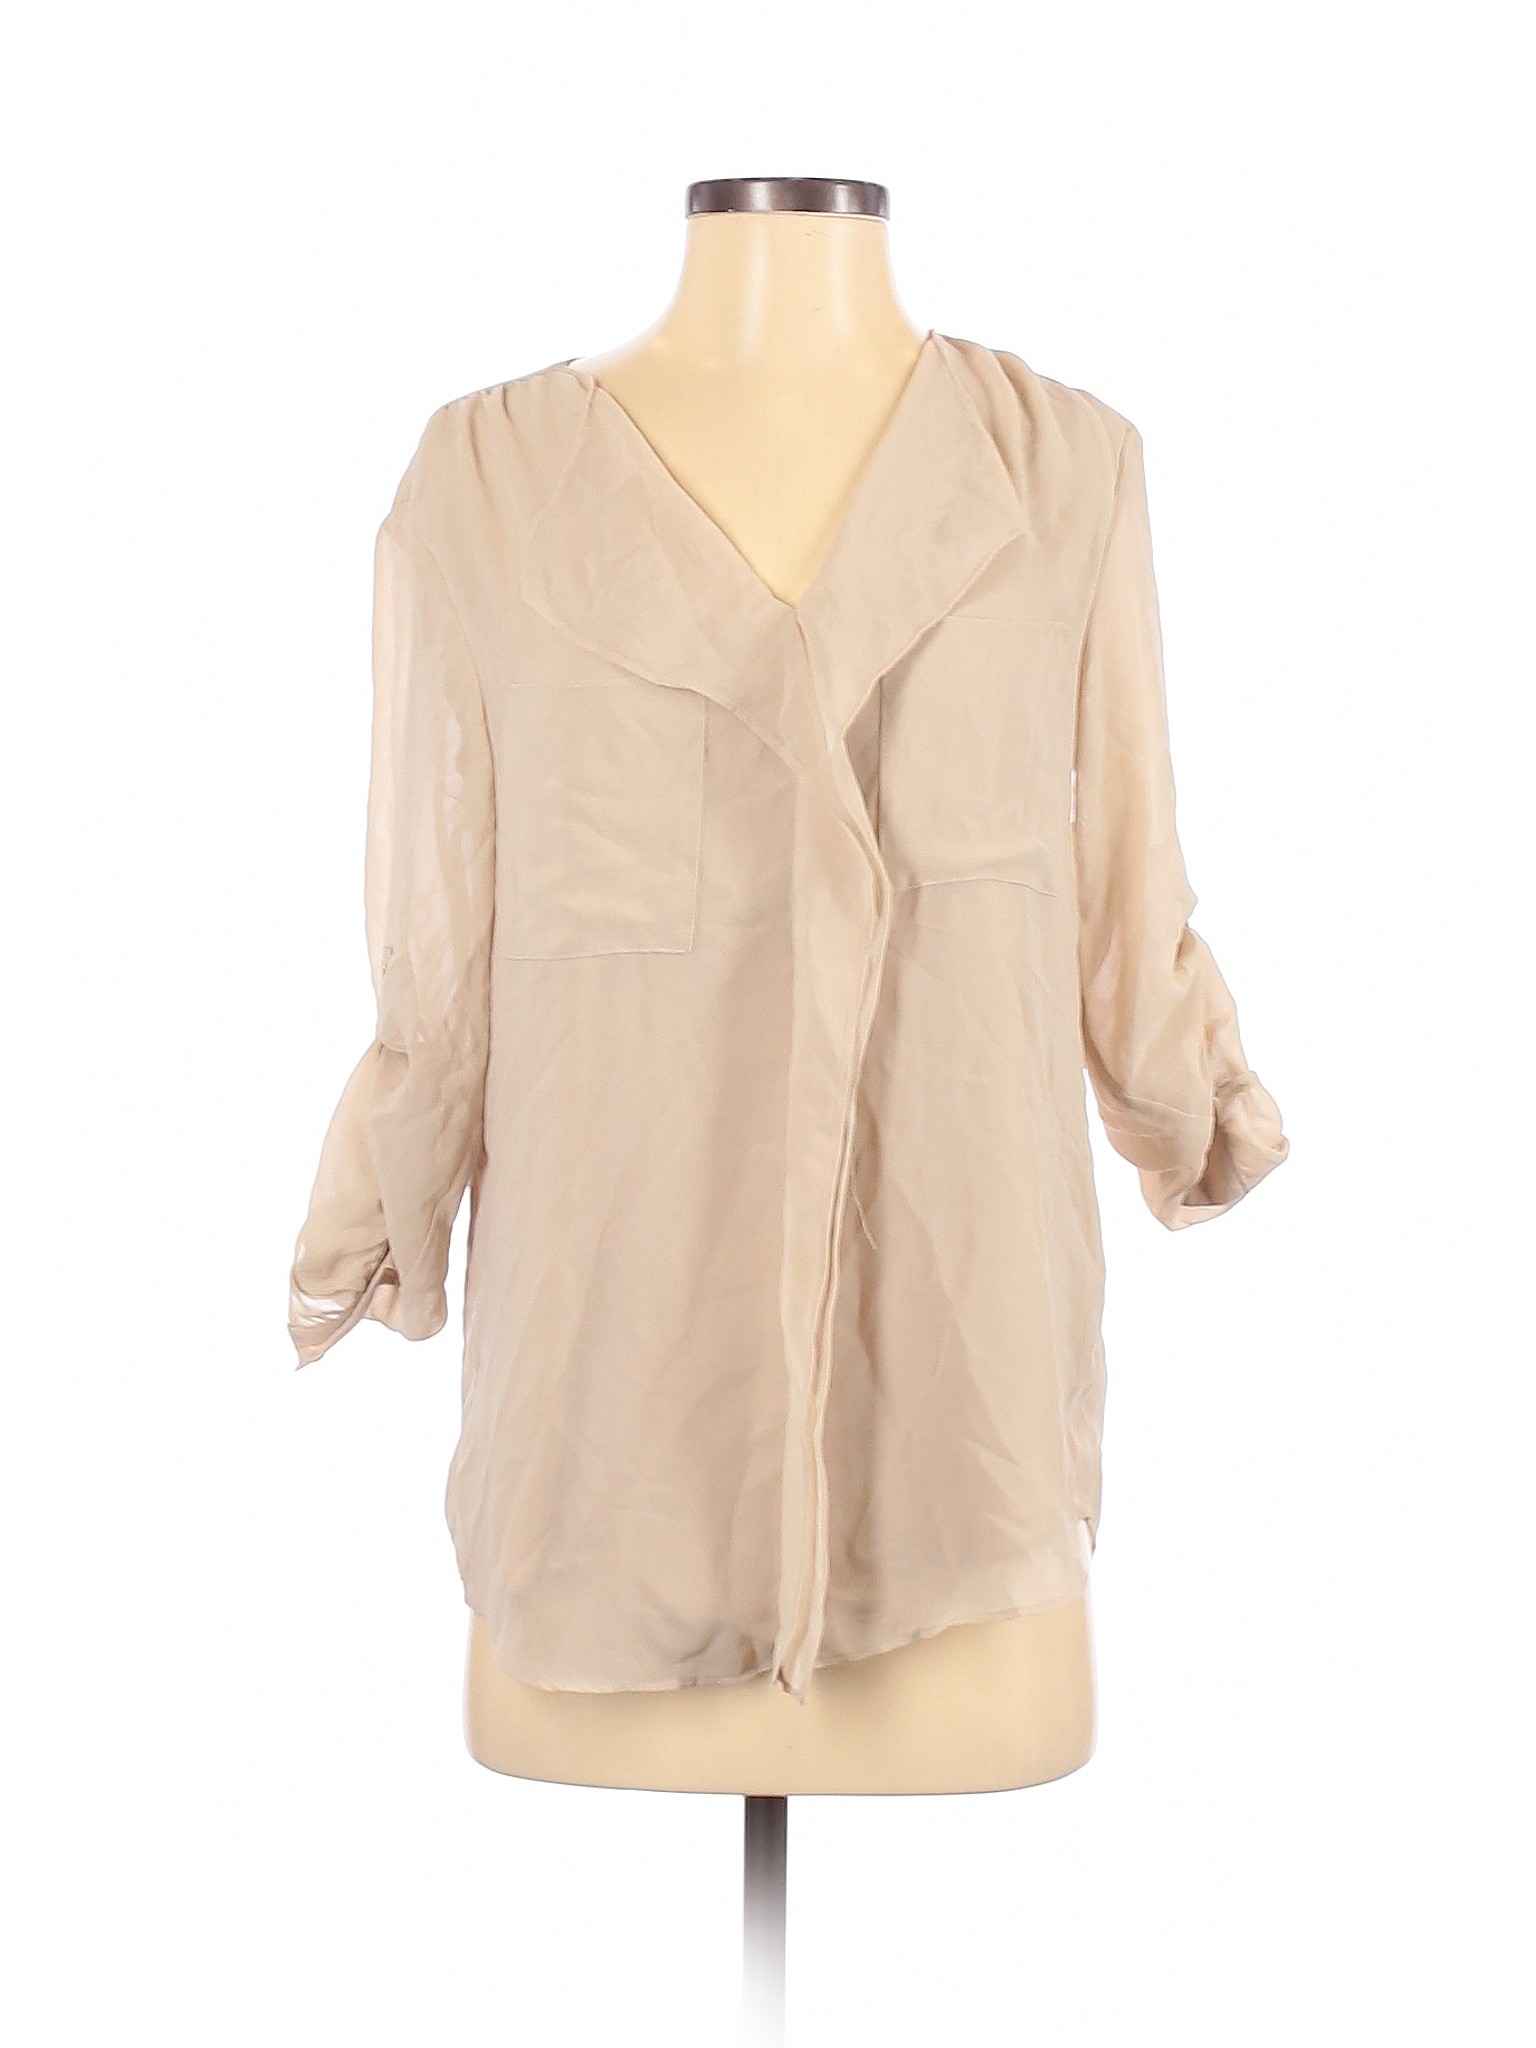 Calvin Klein Women Brown 3/4 Sleeve Blouse XS | eBay